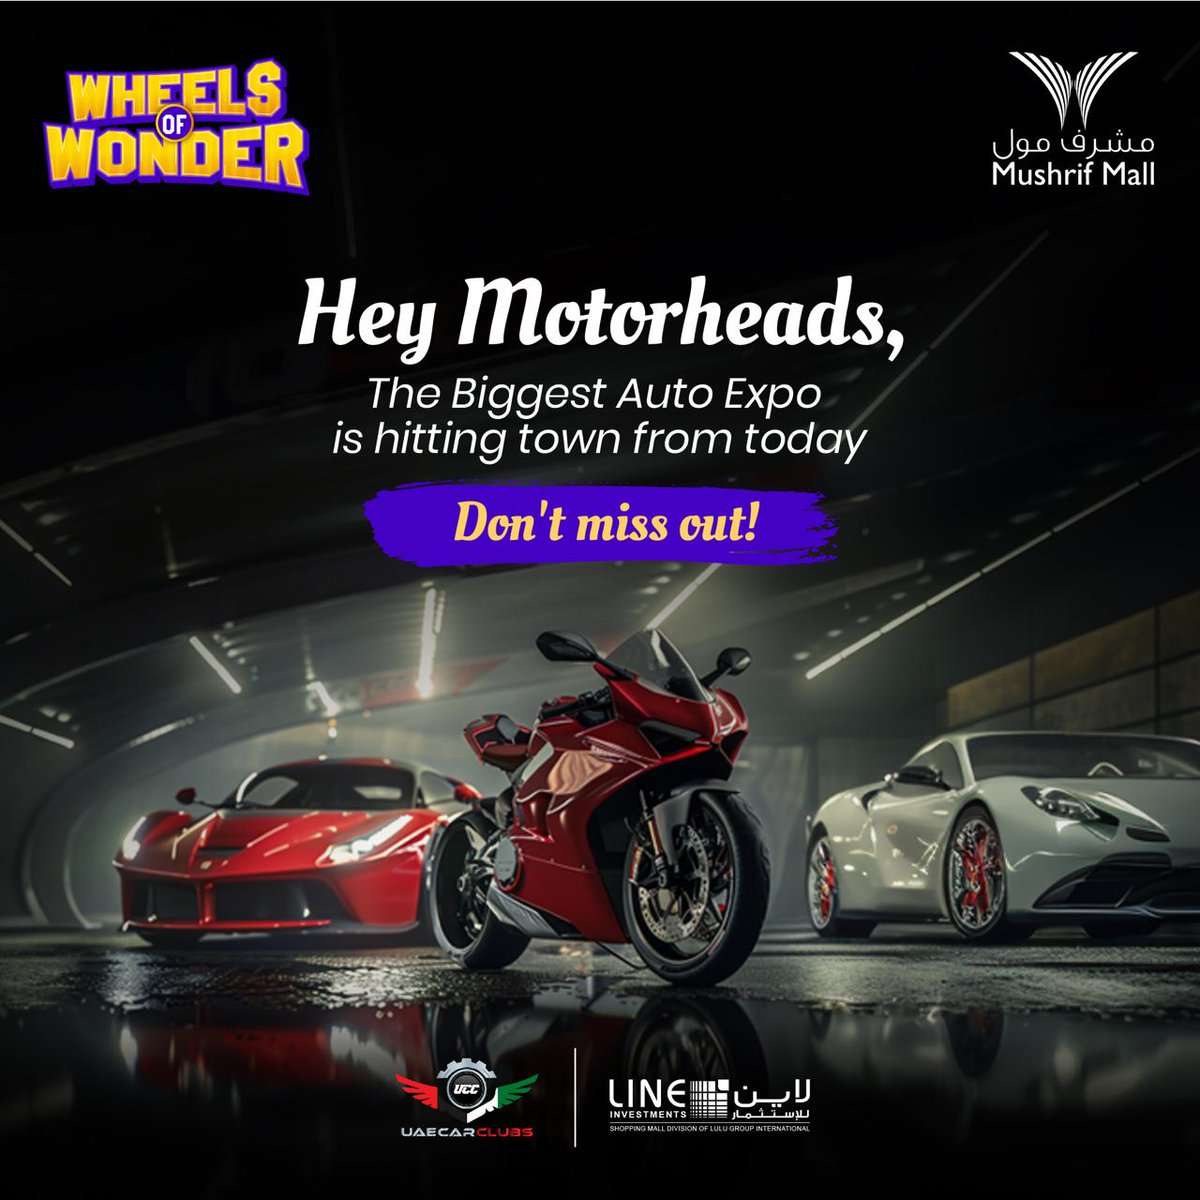 Gearheads unite!  Wheels of Wonder roars on May 17-19th. Don't miss this epic gearhead gathering!

هدير المحركات اجتمعت! يُقام Wheels of Wonder في الفترة من 17 إلى 19 مايو. لا تفوت هذا التجمع الملحمي الصاخب!

#MushrifMall #WheelsOfWonder #AutoExpo #supercars #supercarsofuae